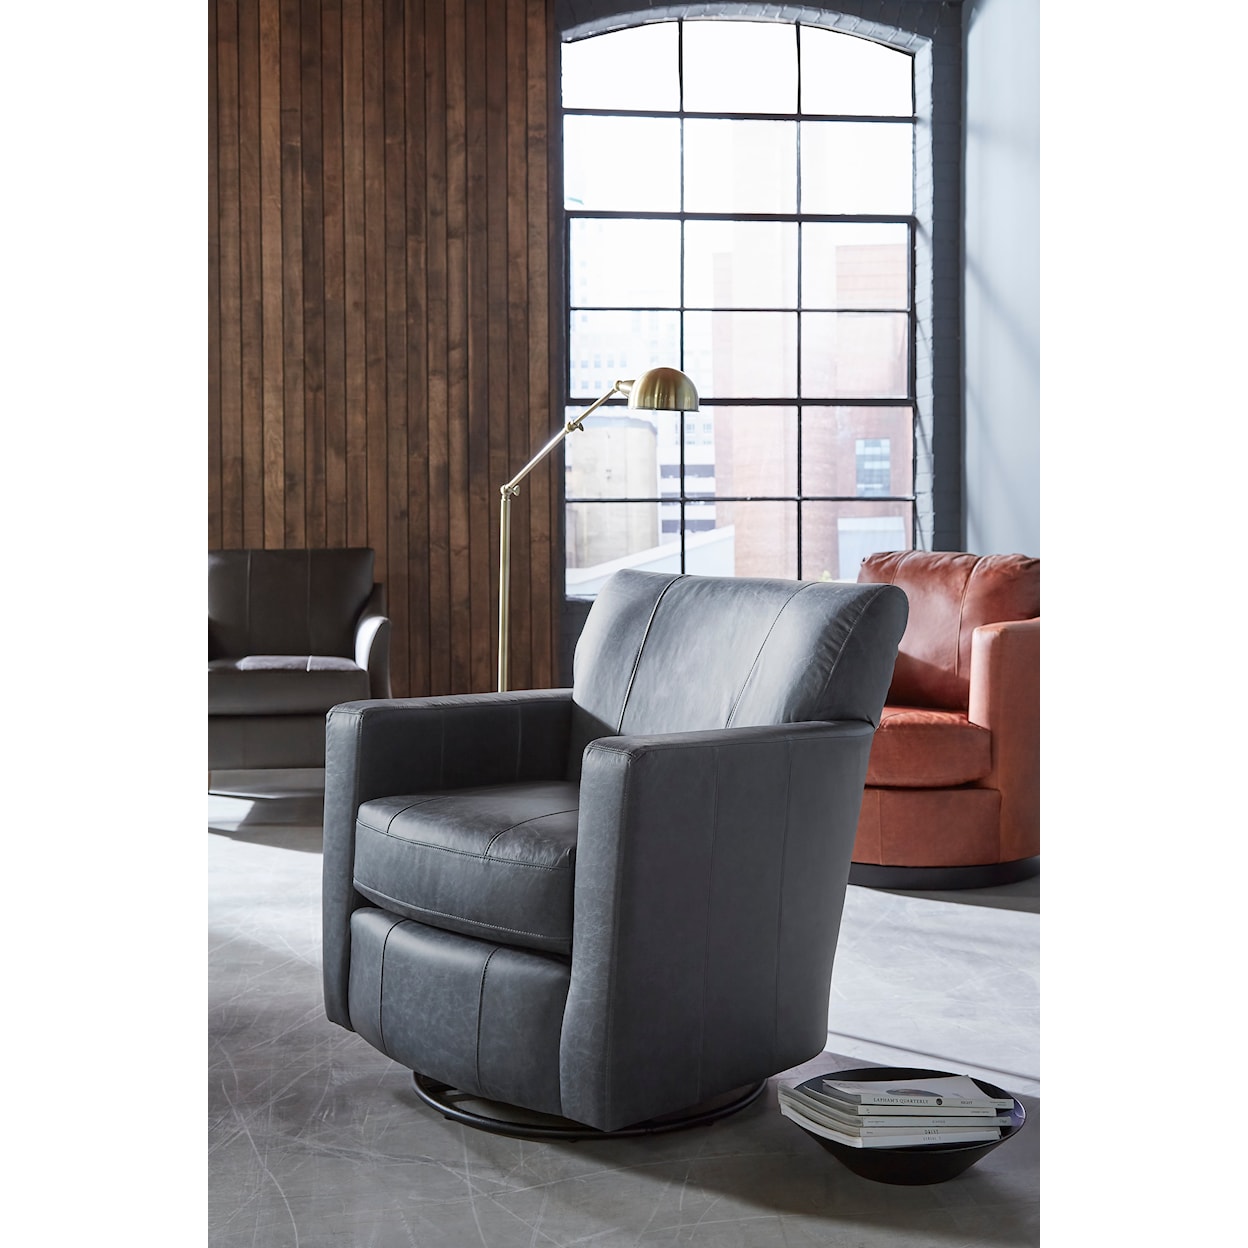 Bravo Furniture Caroly Swivel Glider Chair